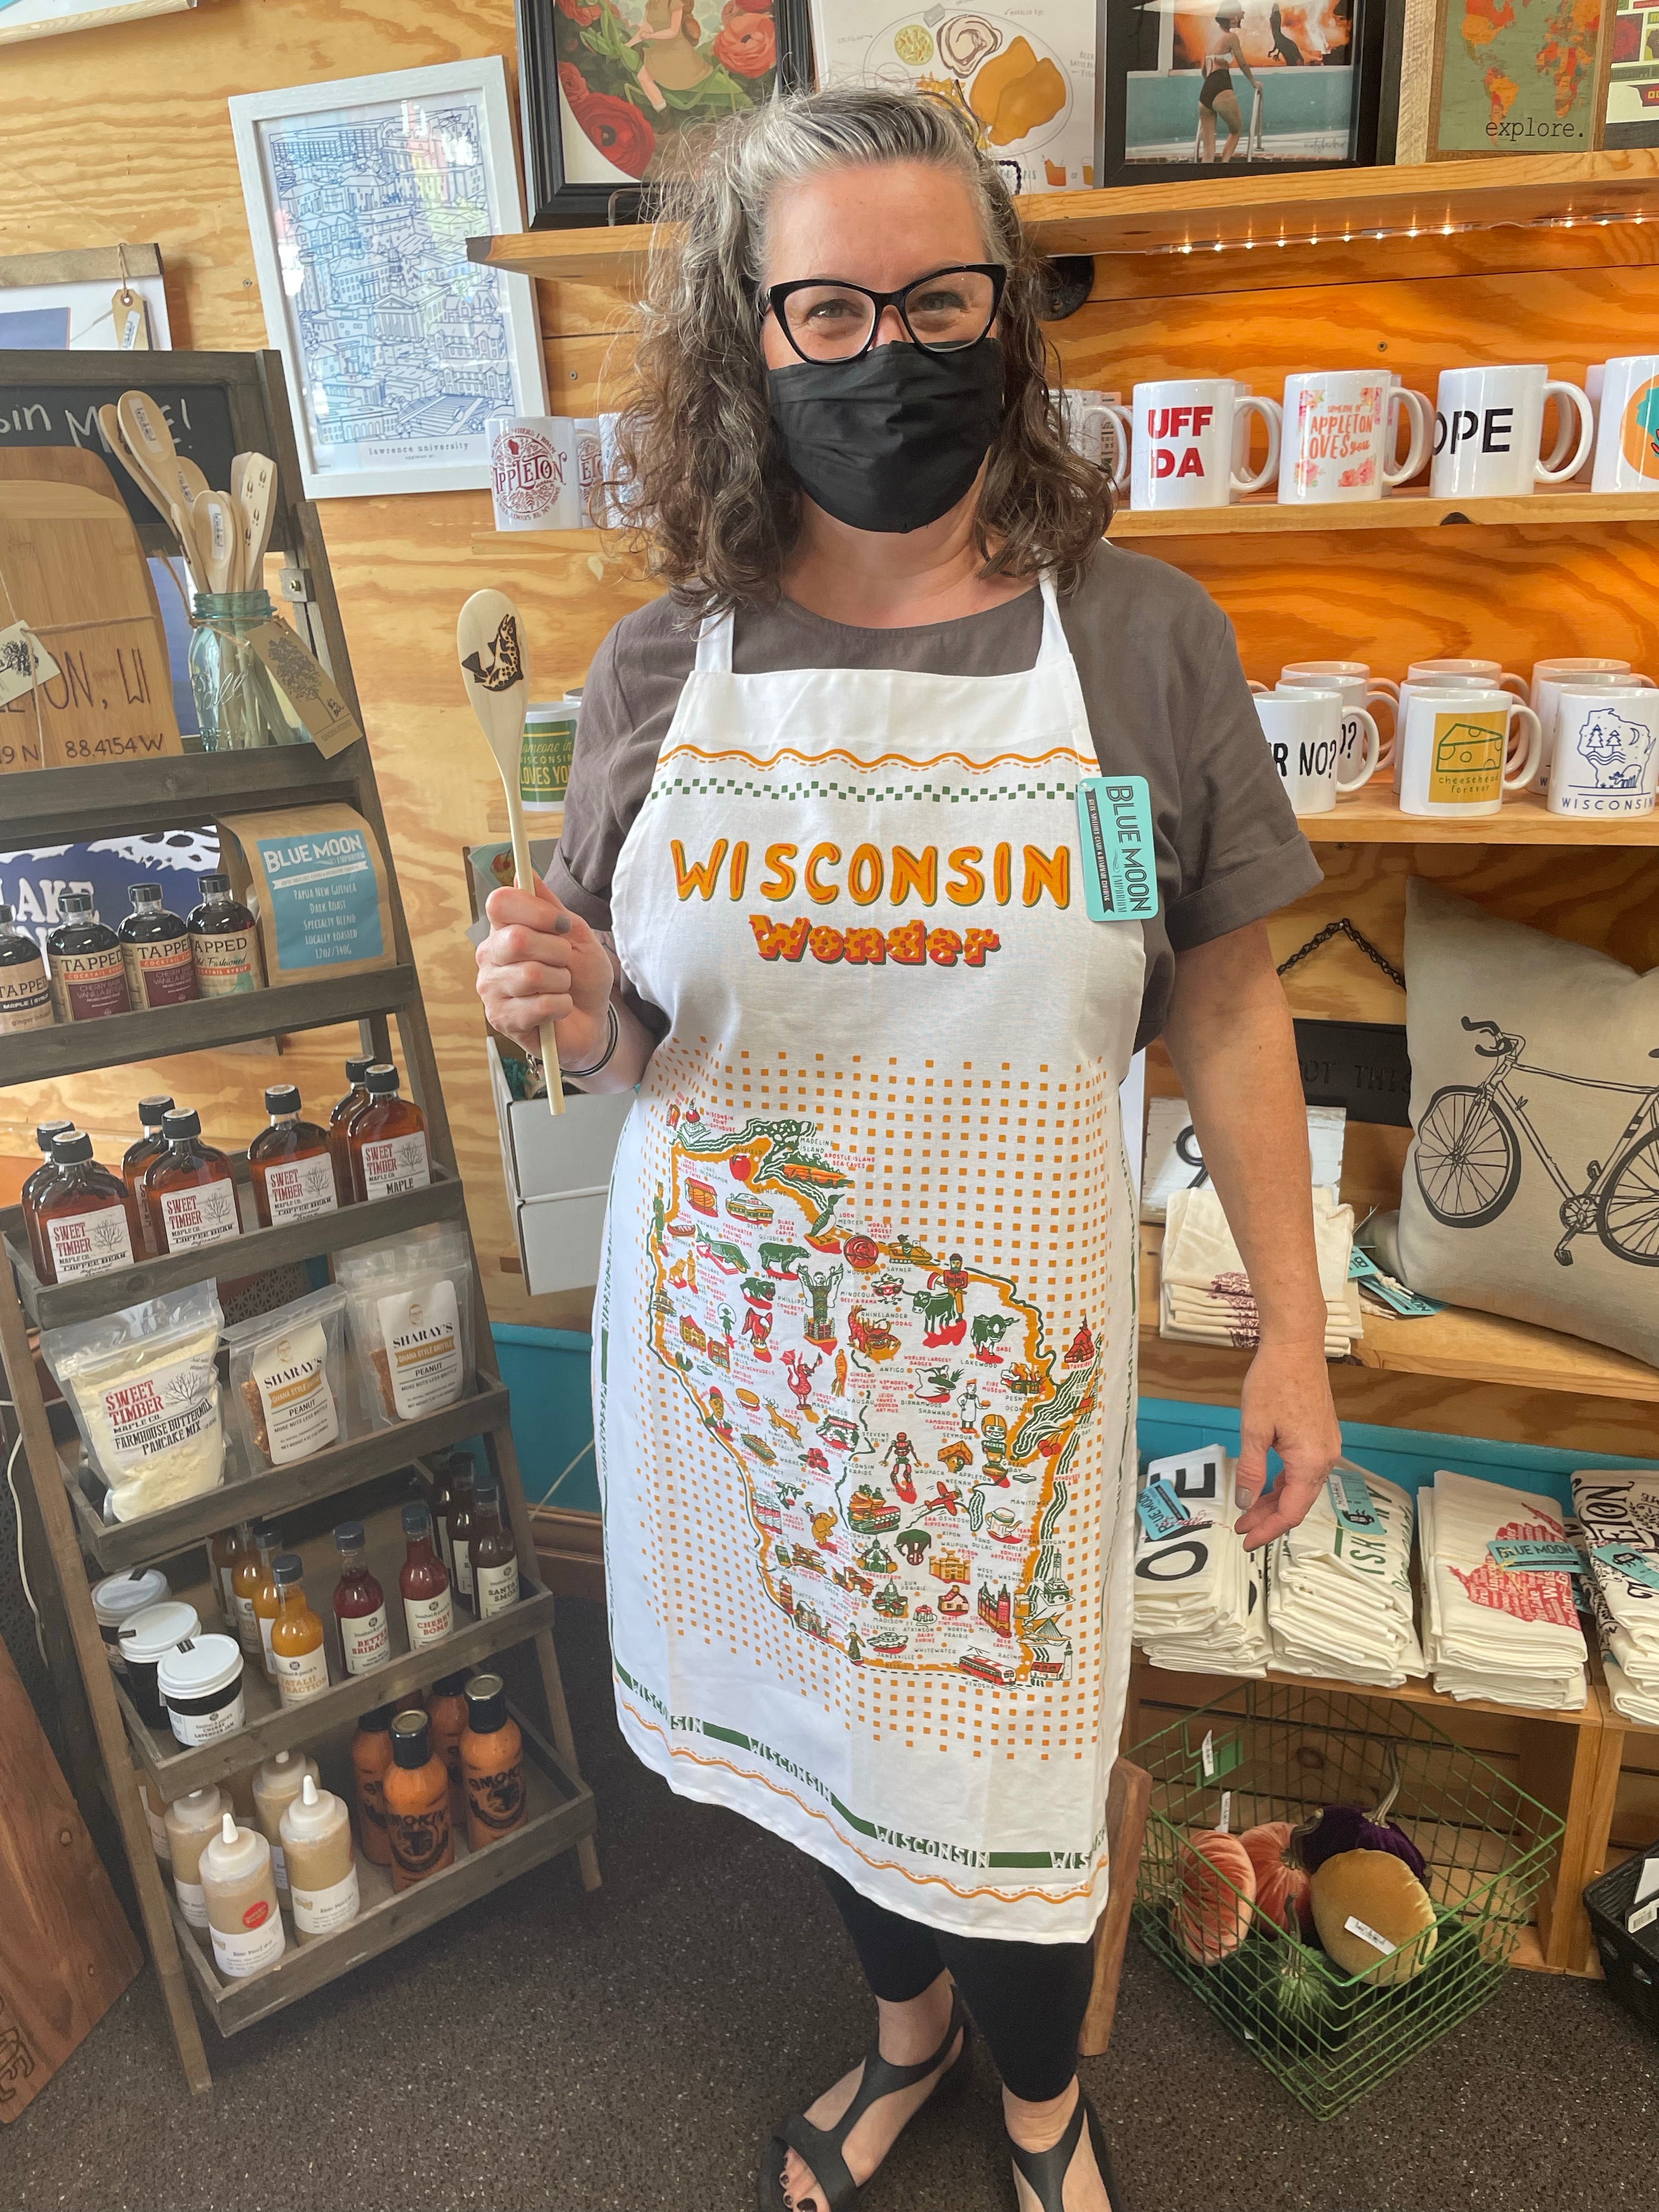 Wonders of Wisconsin Apron